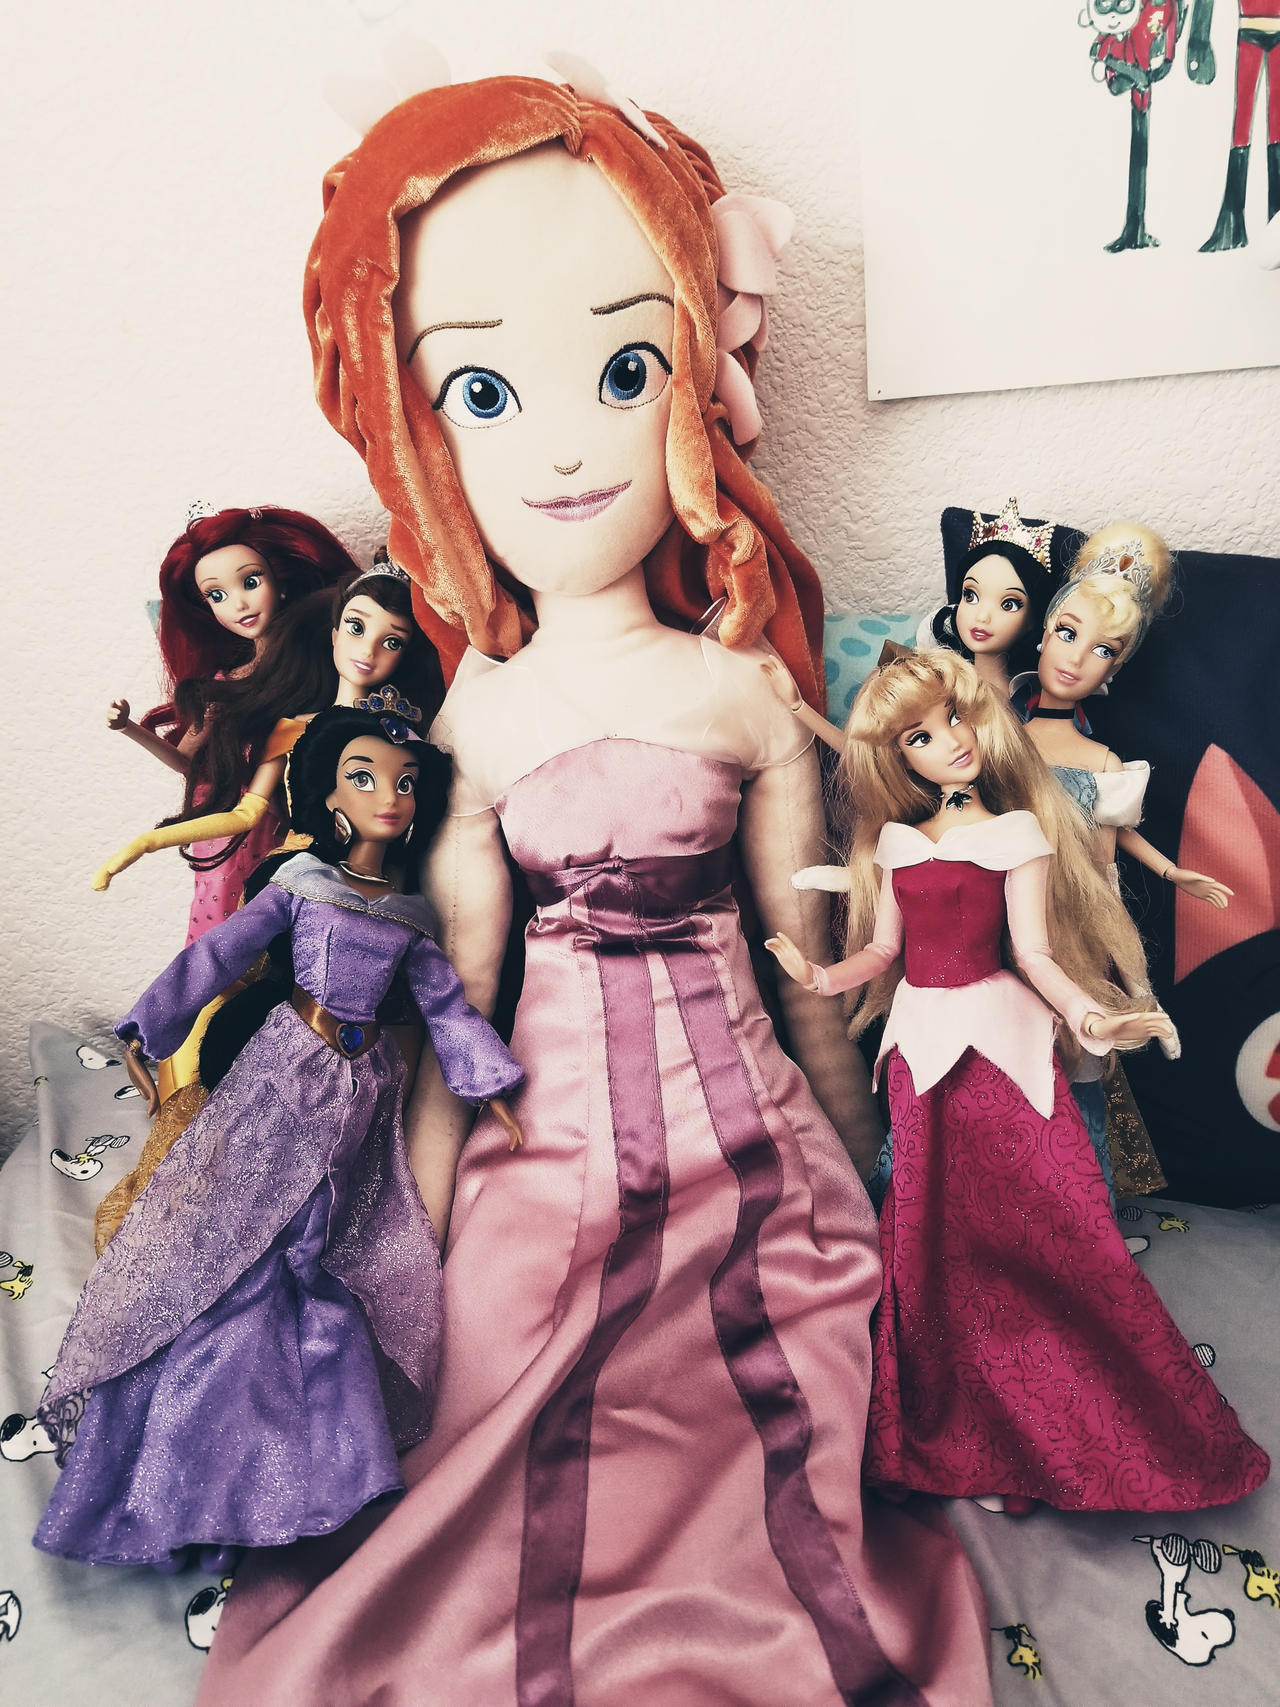 Disney Plush Princesses, Disney Princesses Dolls